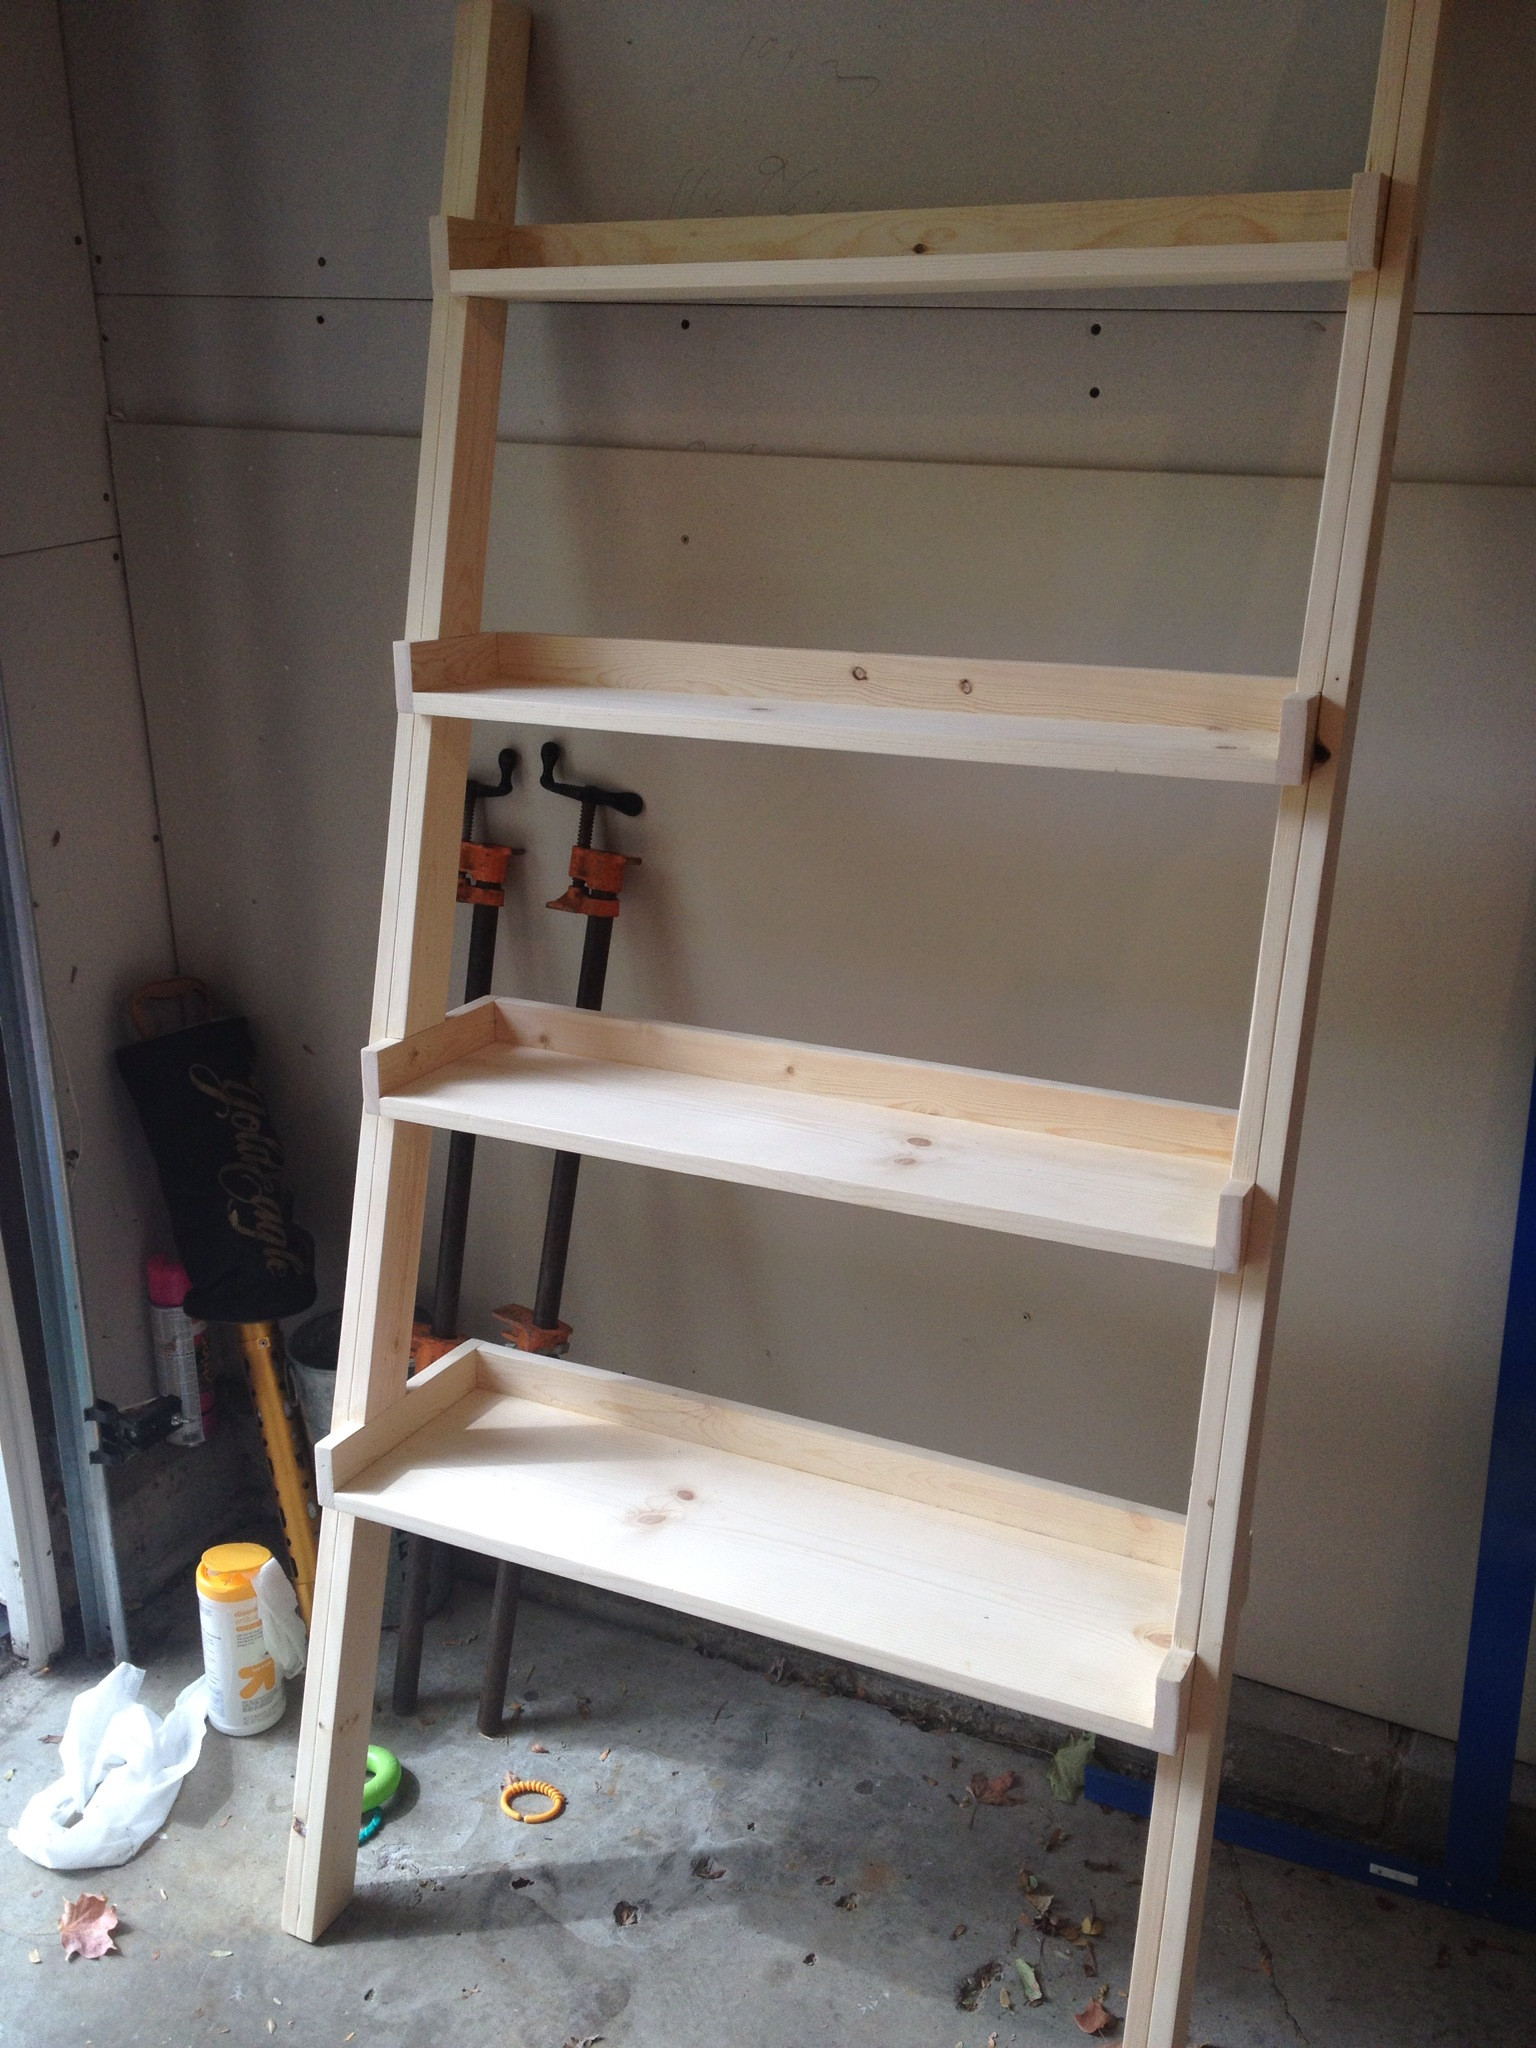 Best ideas about DIY Ladder Shelf
. Save or Pin DIY Ladder Bookshelf An Easy Weekend Project Now.